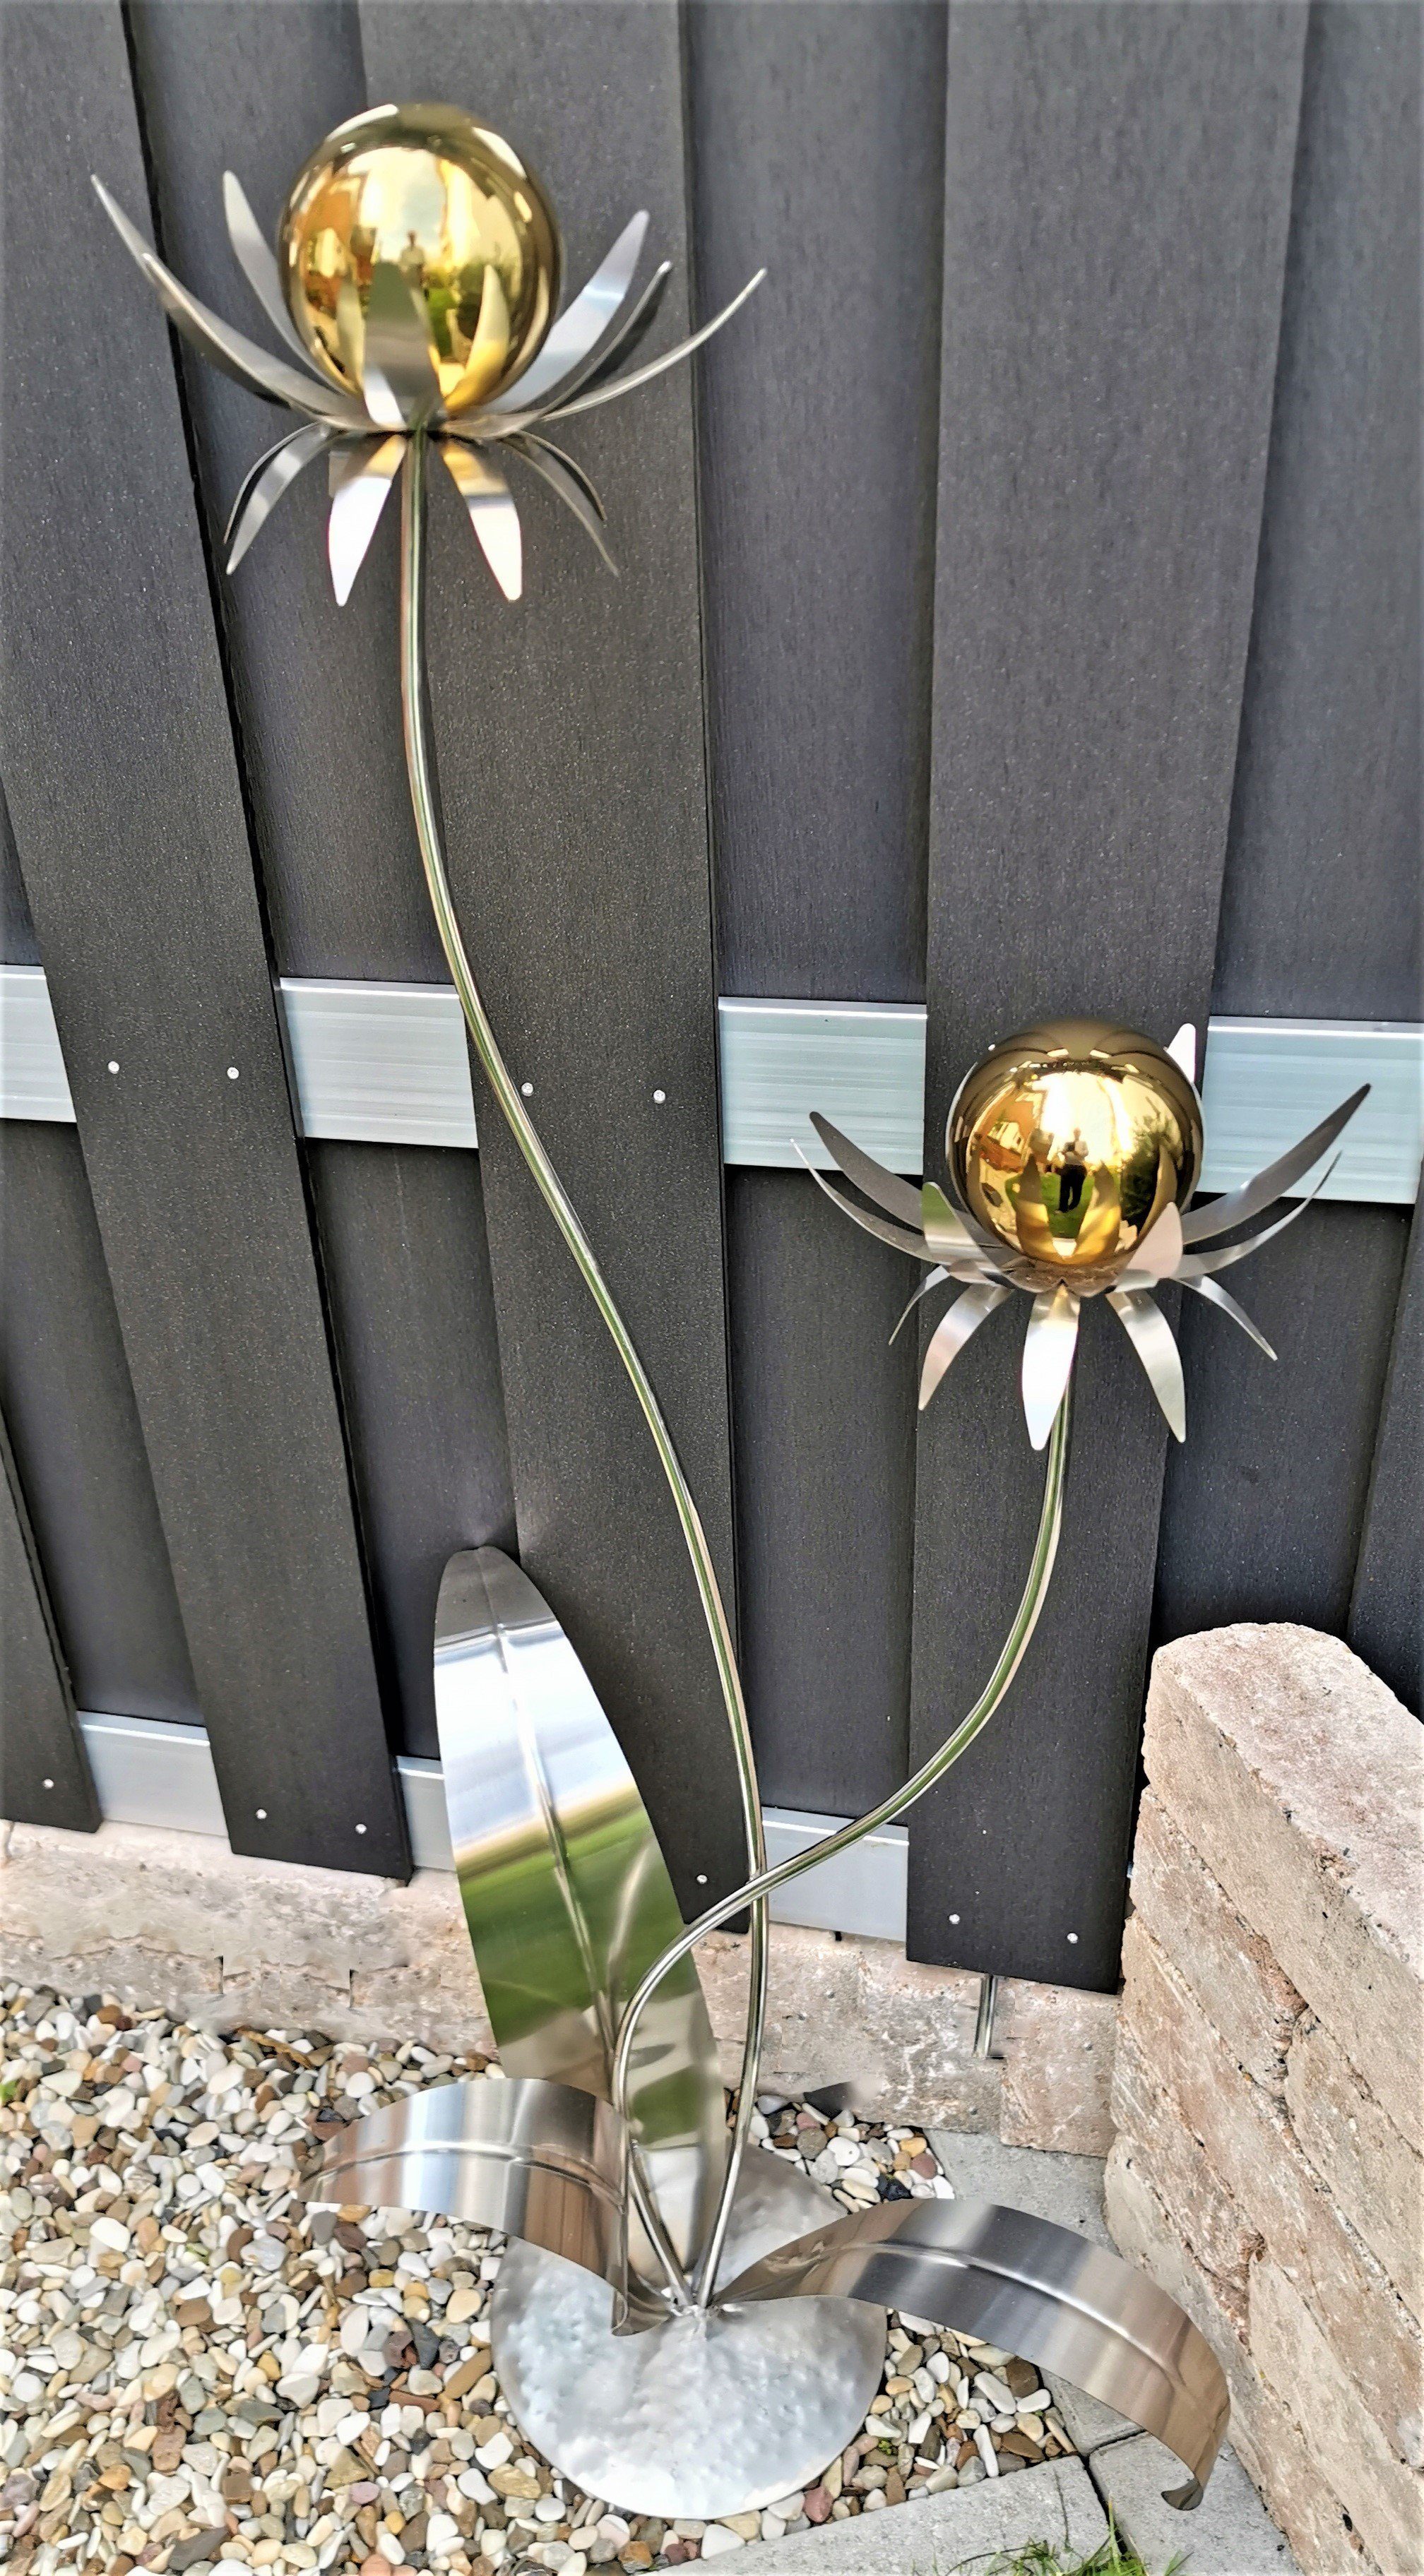 Jürgen Bocker Garten-Ambiente Gartenstecker Skulptur Blume Milano Edelstahl 120 cm Kugel Edelstahl gold poliert Standfuß Garten